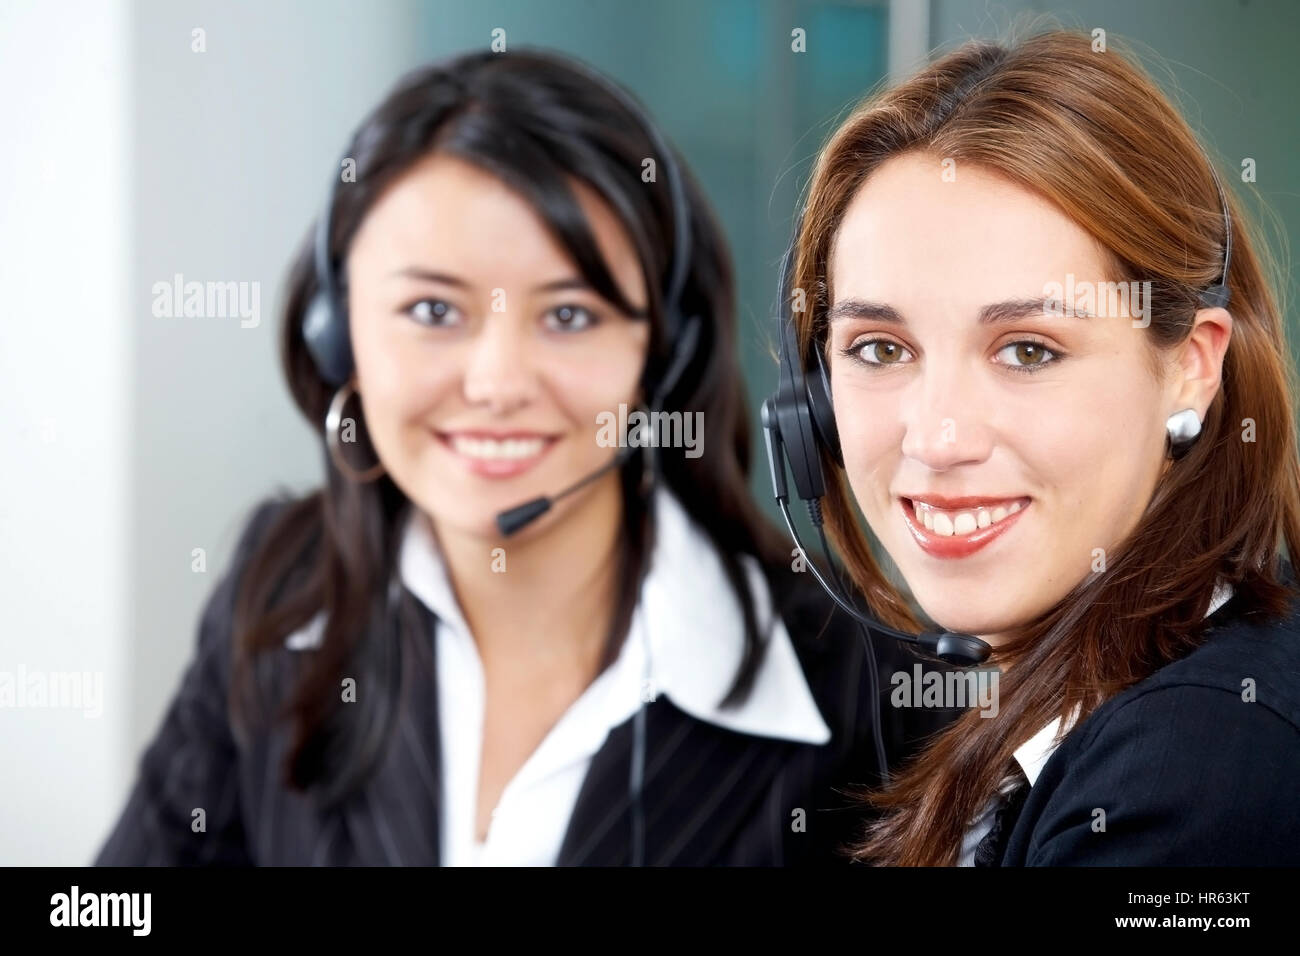 customer service secretaries in an office environment Stock Photo